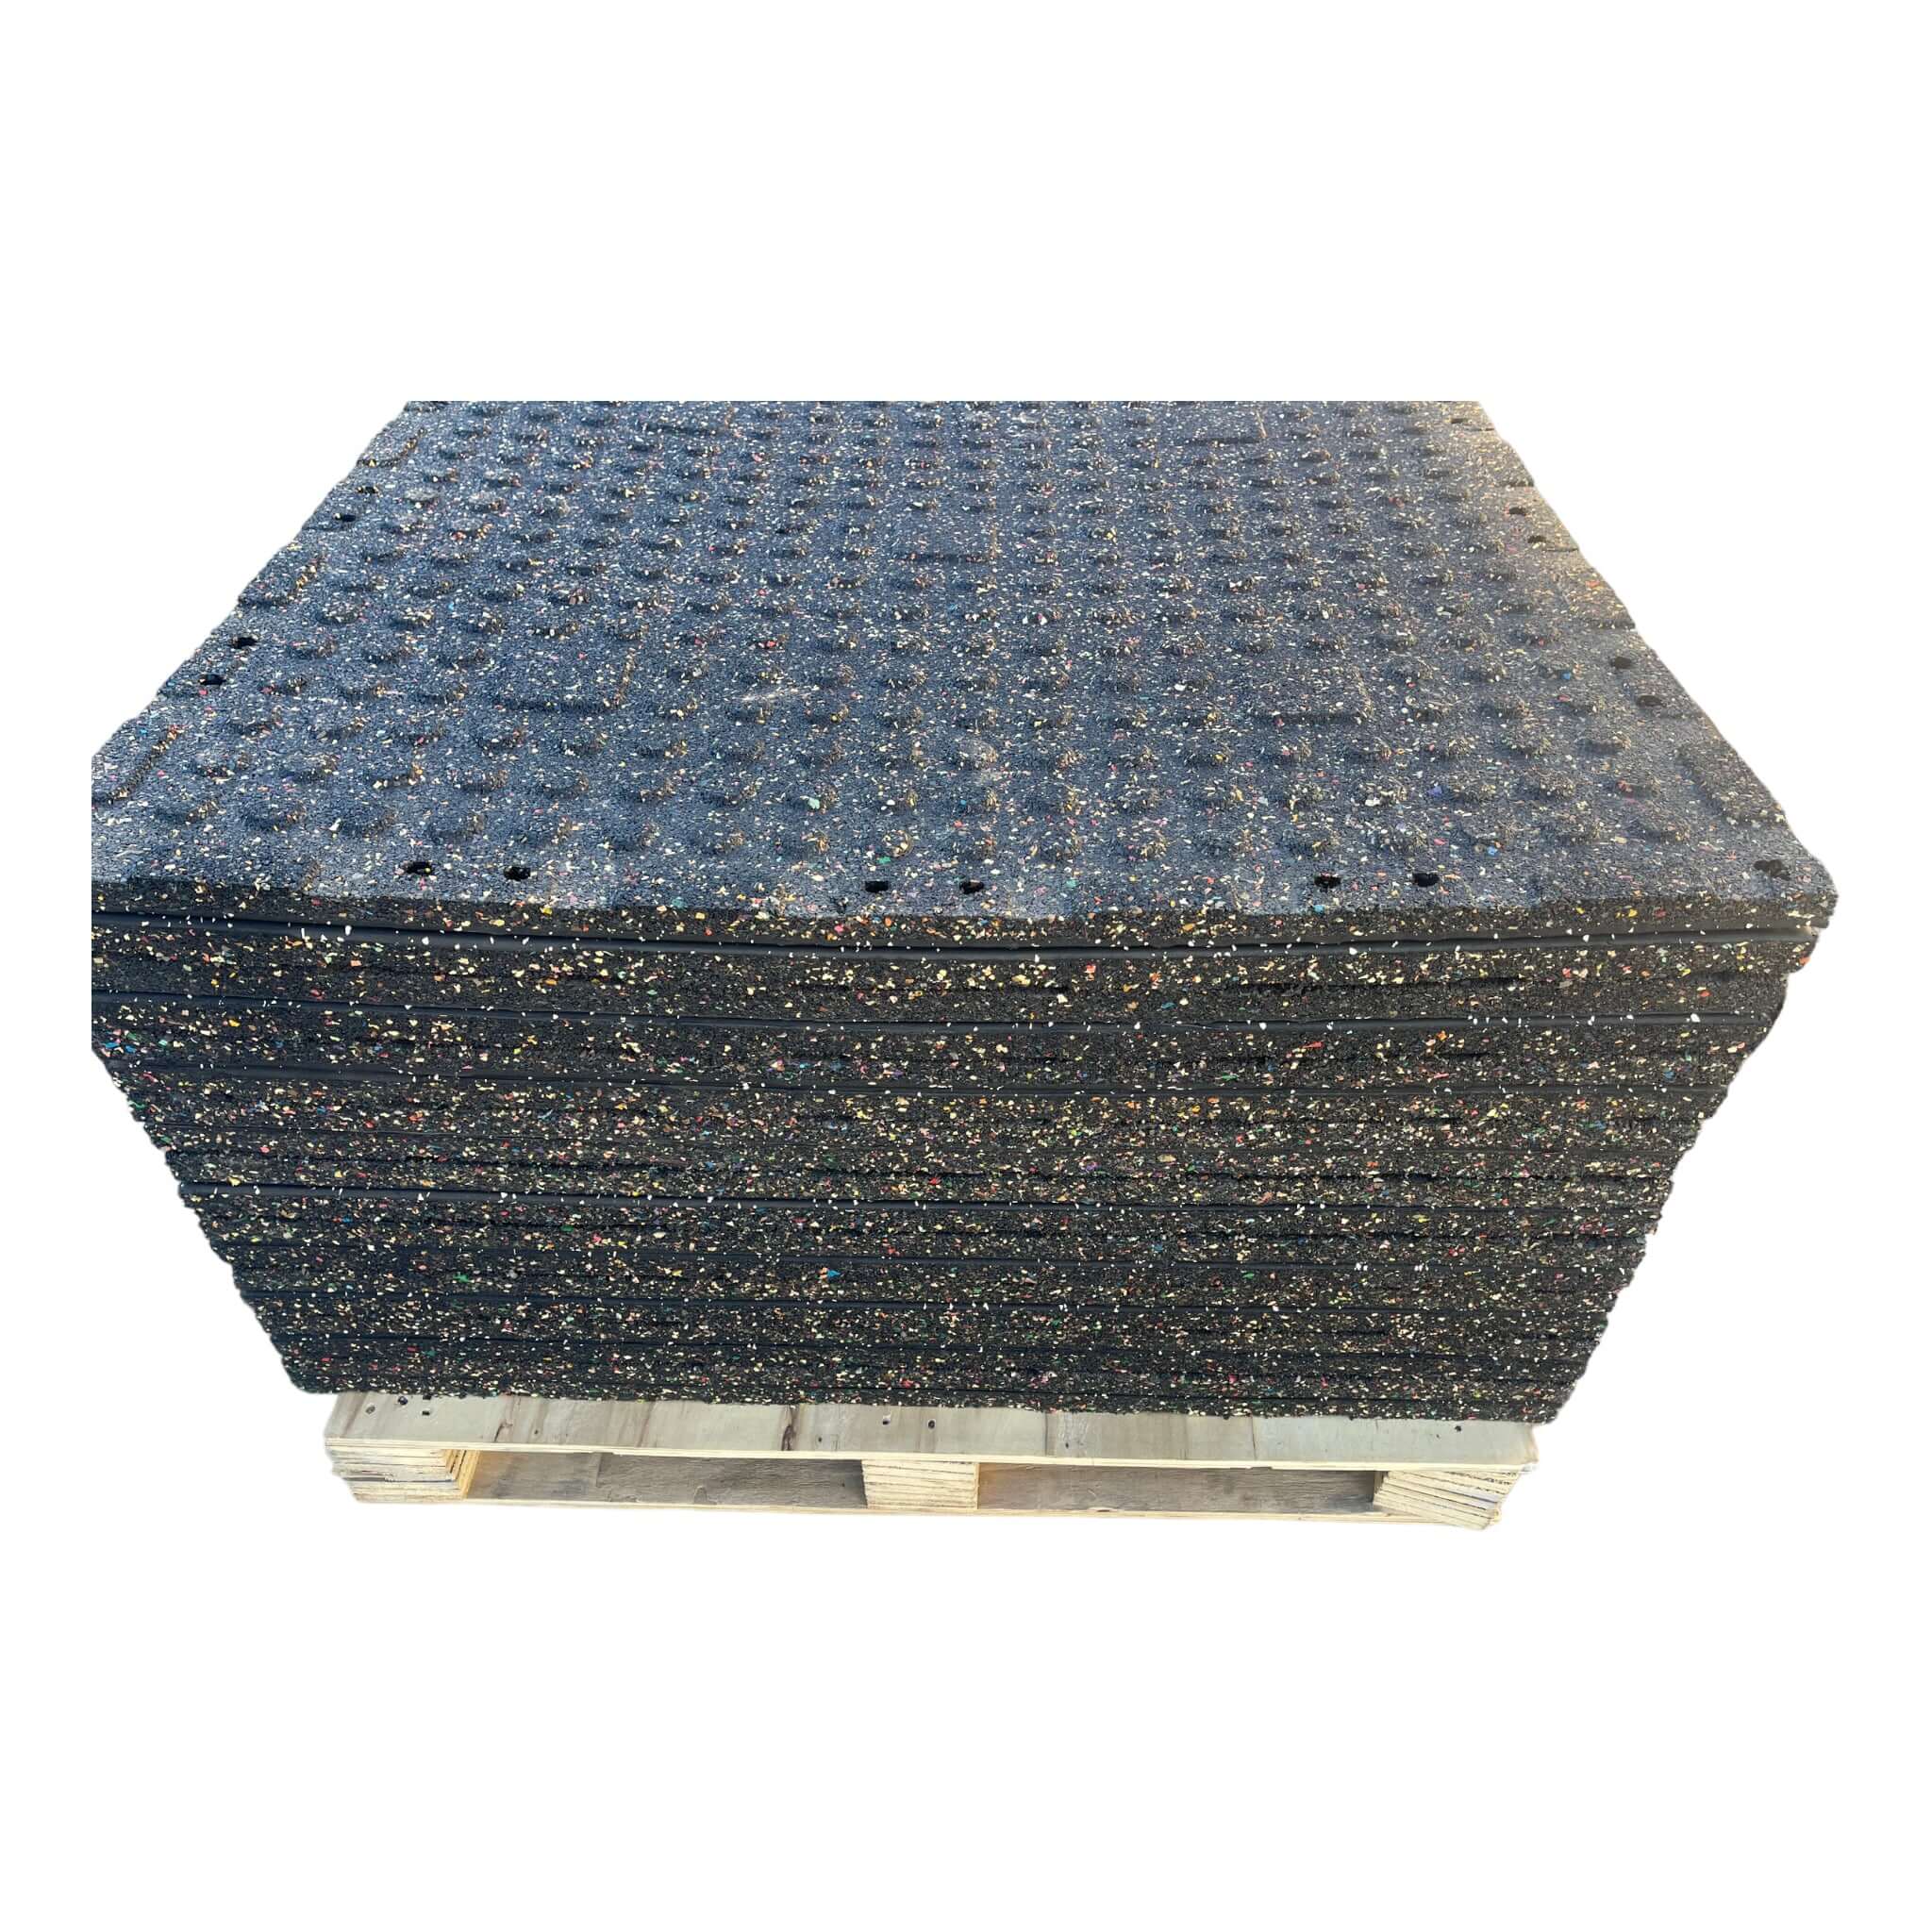 Single 30mm Rubber Gym Flooring Dual Density EPDM Rubber Dense Tile Mat 1m x 1m BLACK with WHITE | INSOURCE